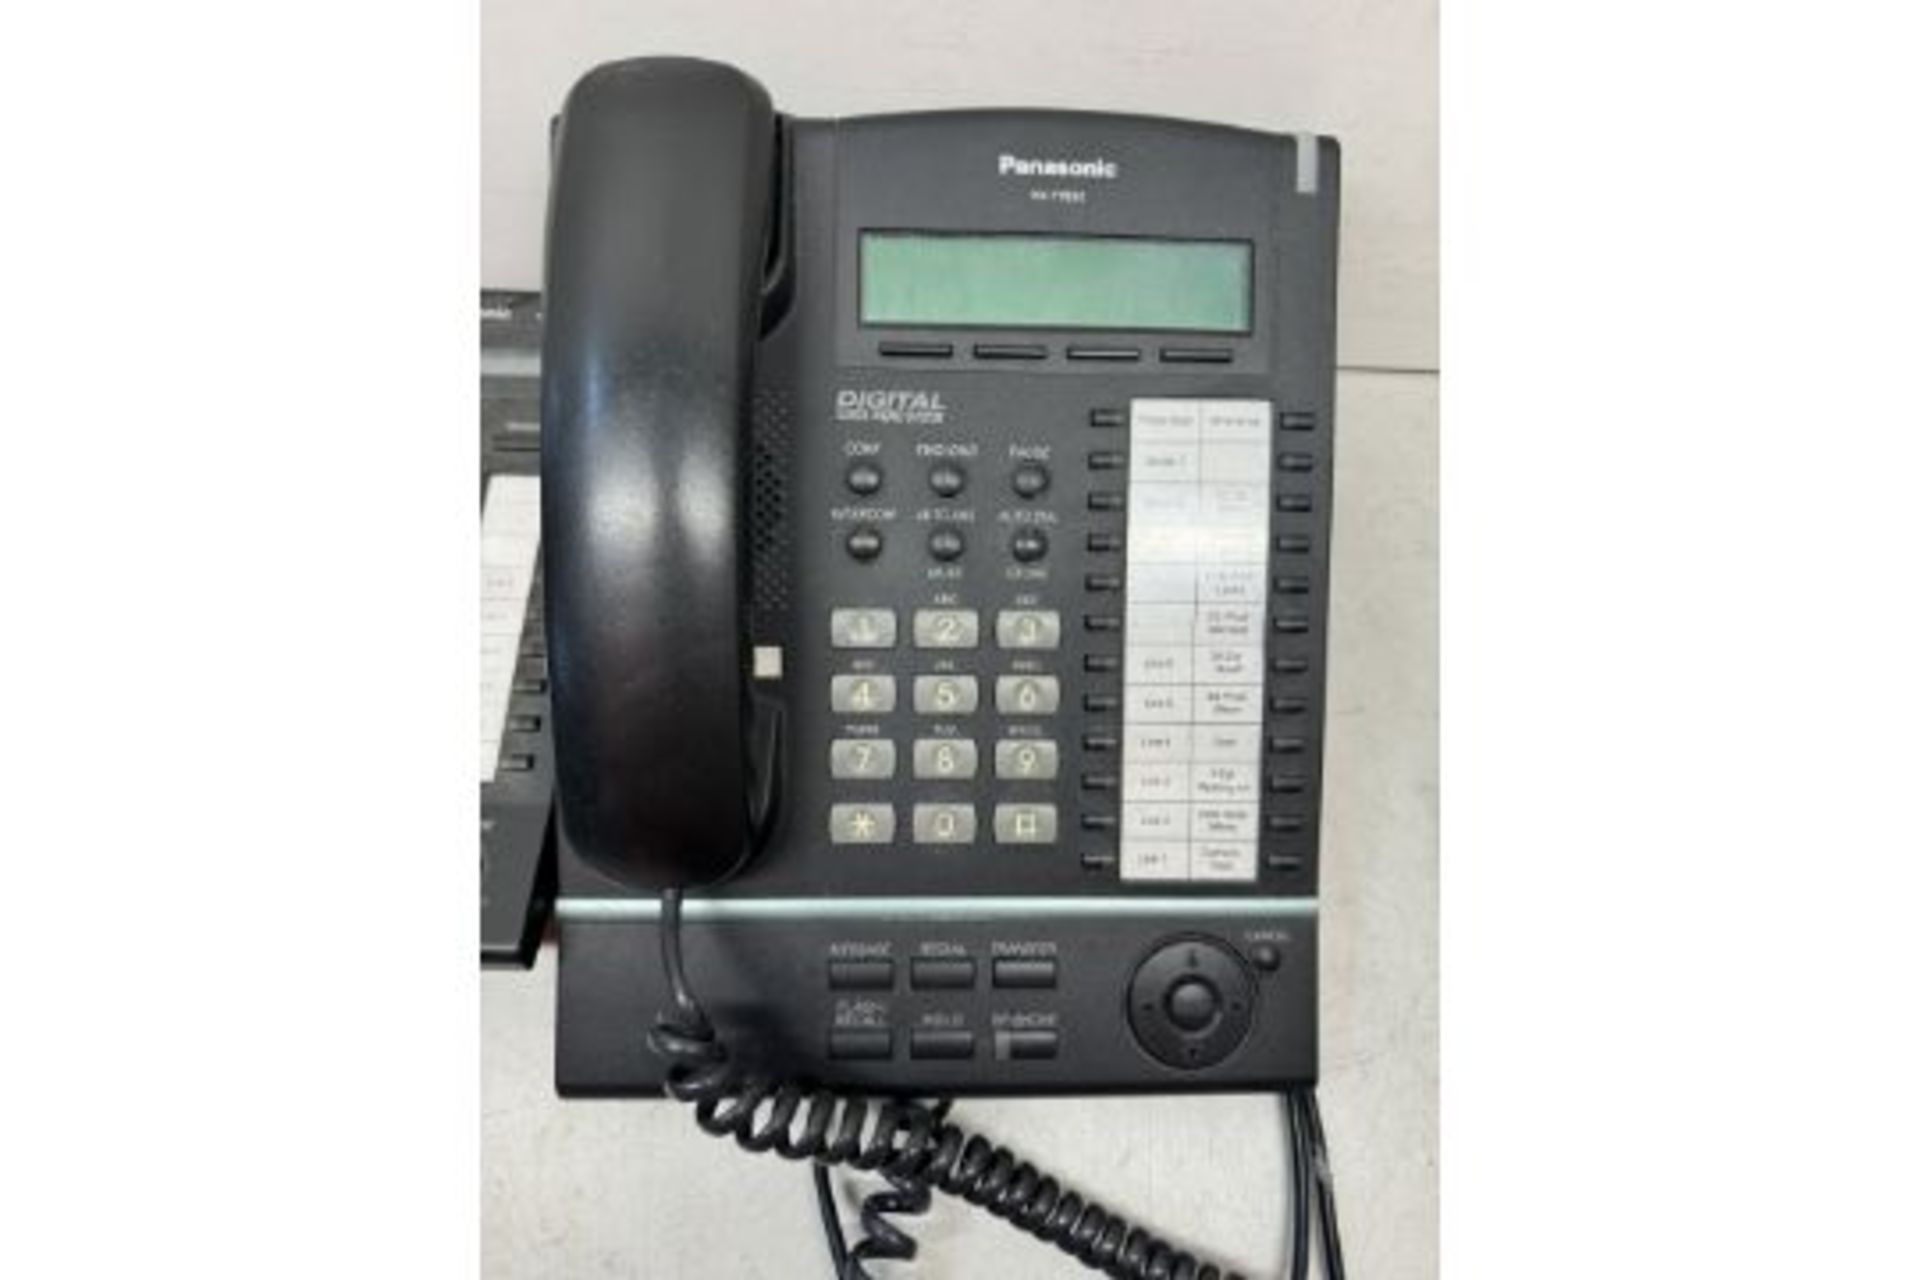 10 x Panasonic Telephones As Seen In Photos - Image 2 of 6